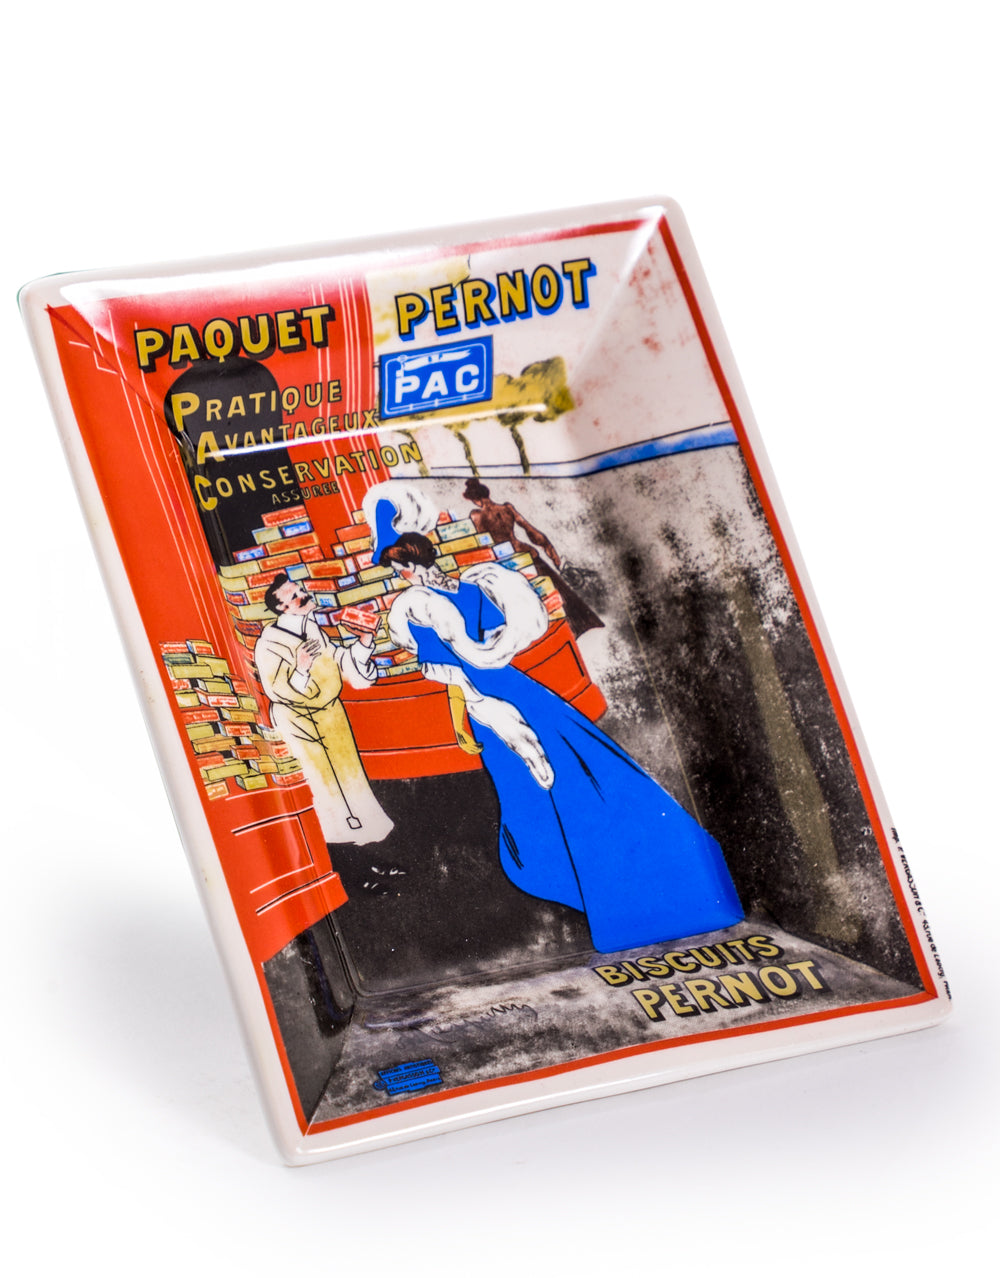 Ceramic "Paquet Pernot" Poster Trinket Plate